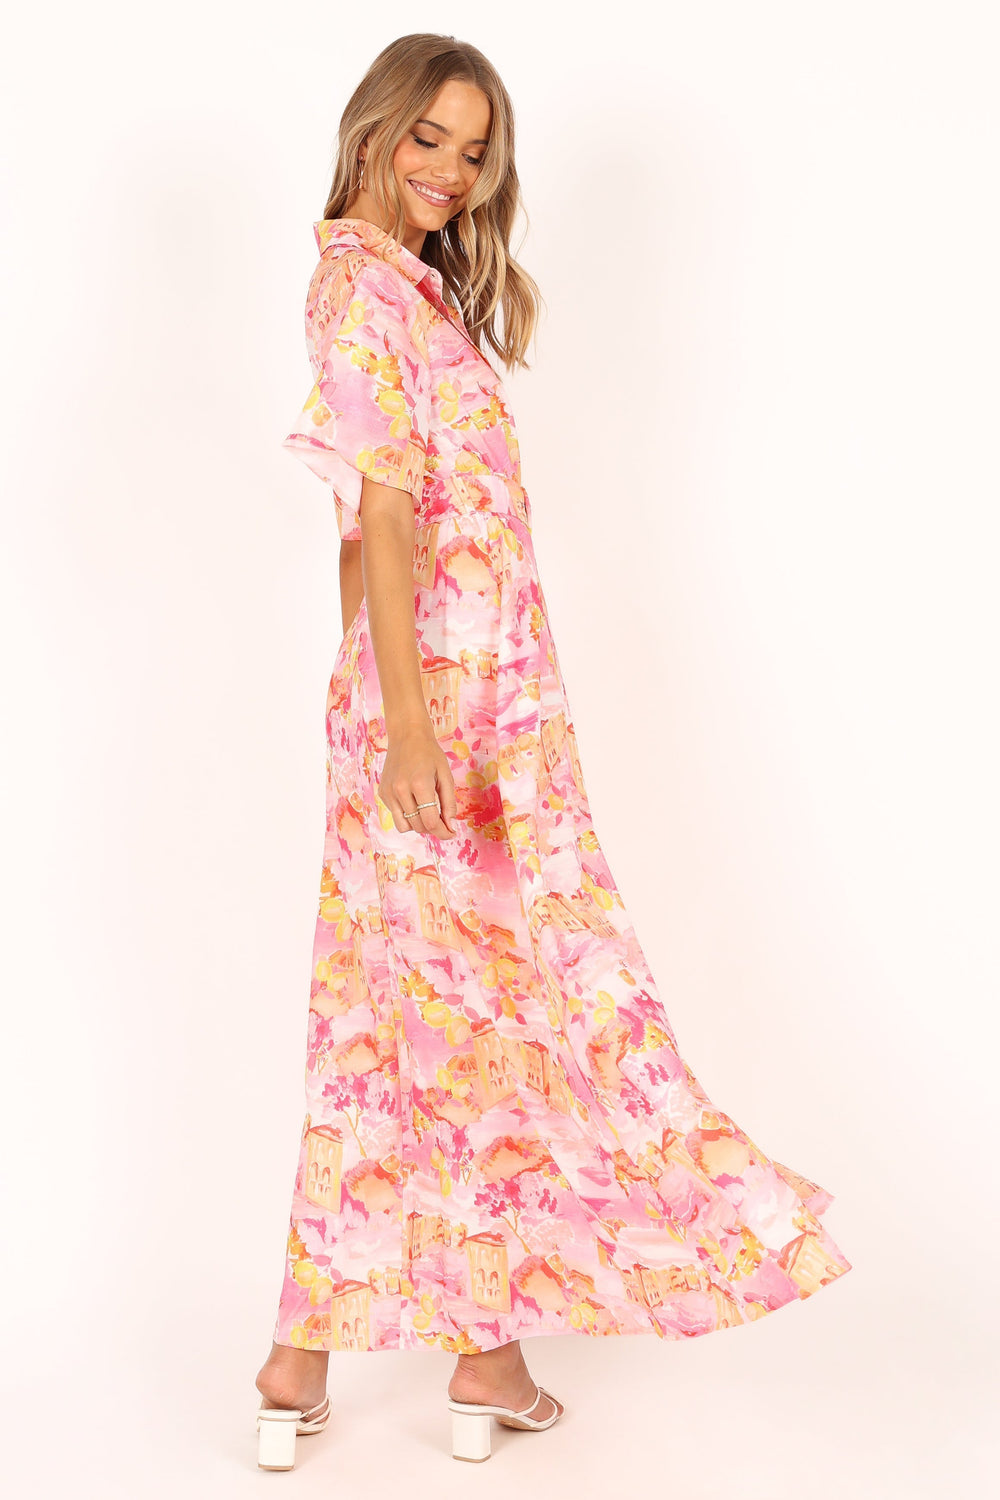 Petal and Pup USA DRESSES Arianna Maxi Dress - Pink Scenic